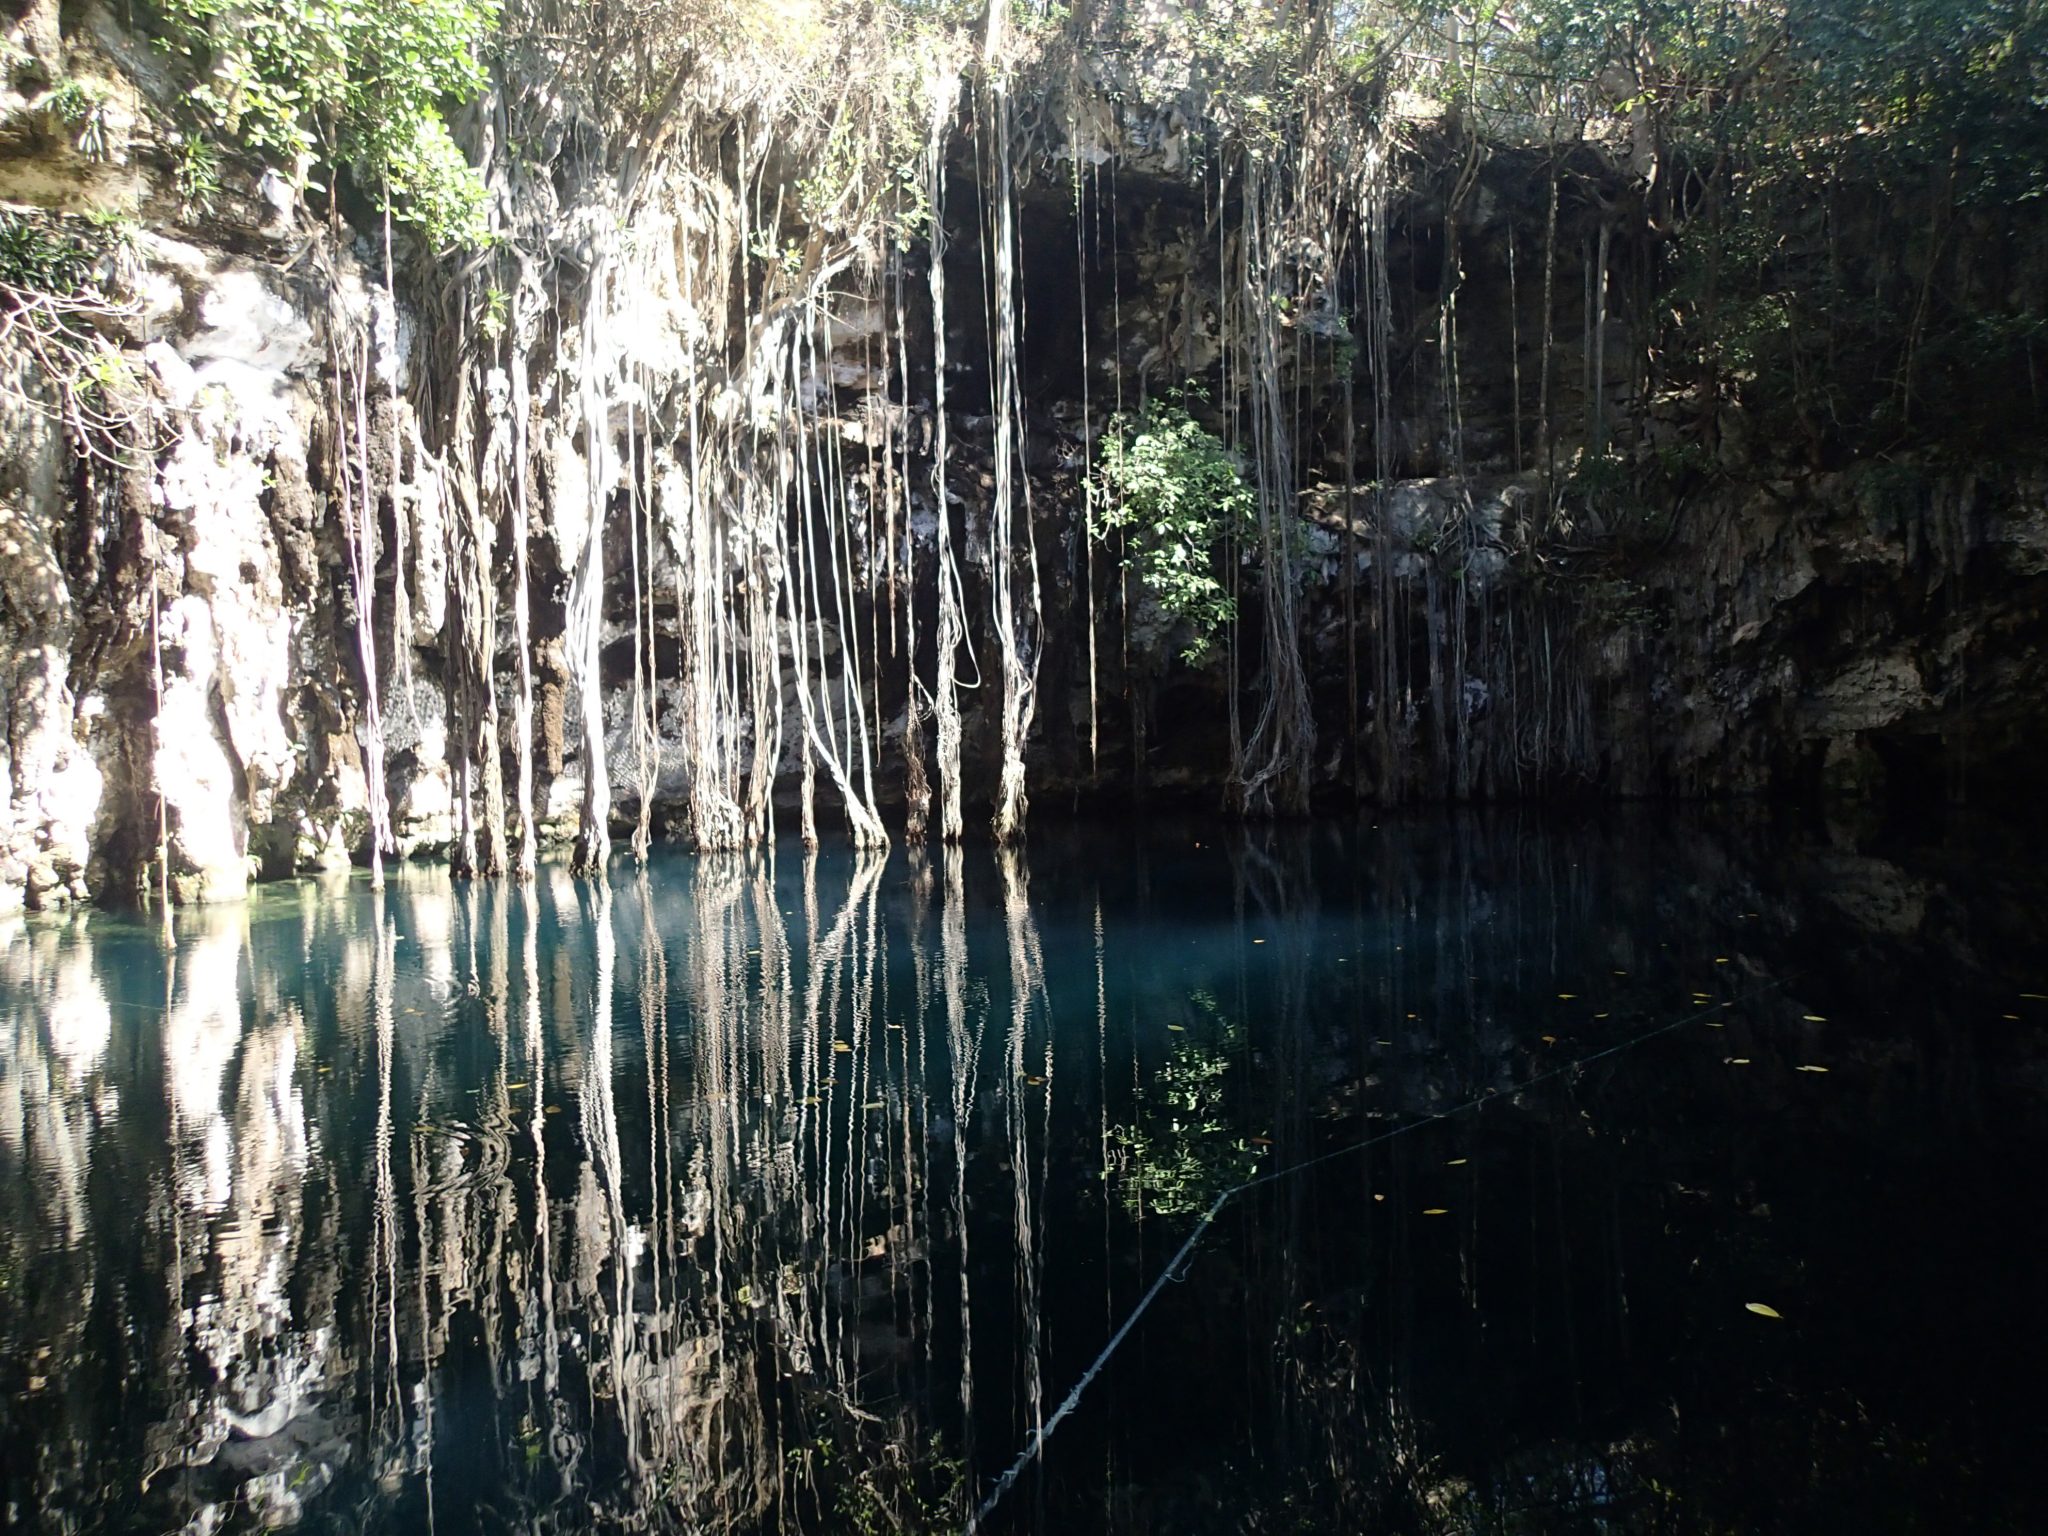 Roots reaching toward the water at Yokzonodot cenote